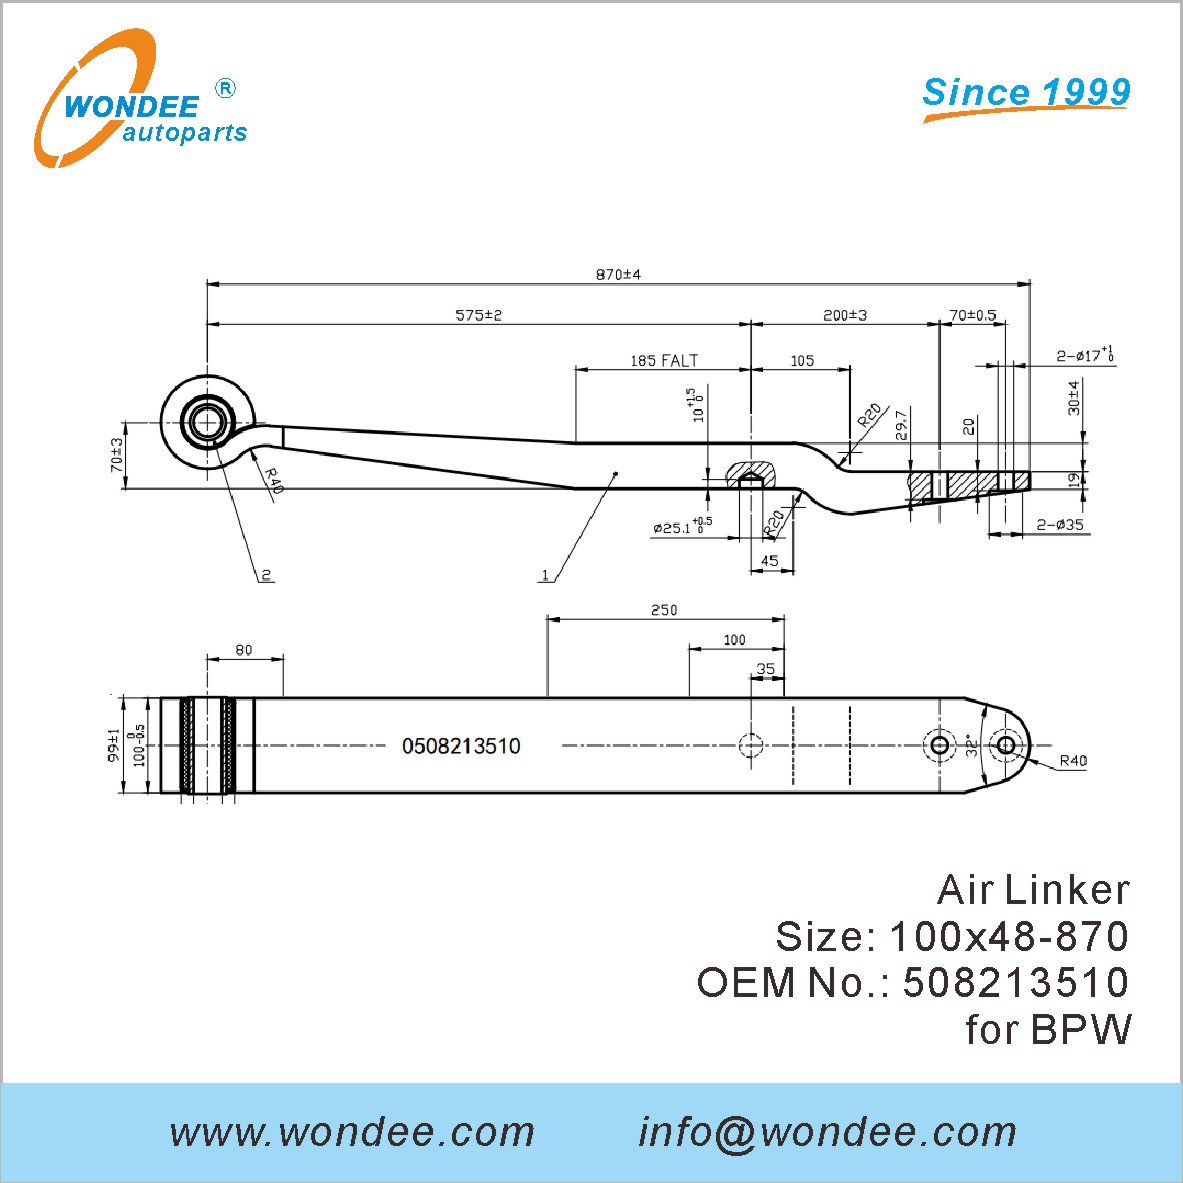 WONDEE Autoparts Air Linker OEM 508213510 for BPW